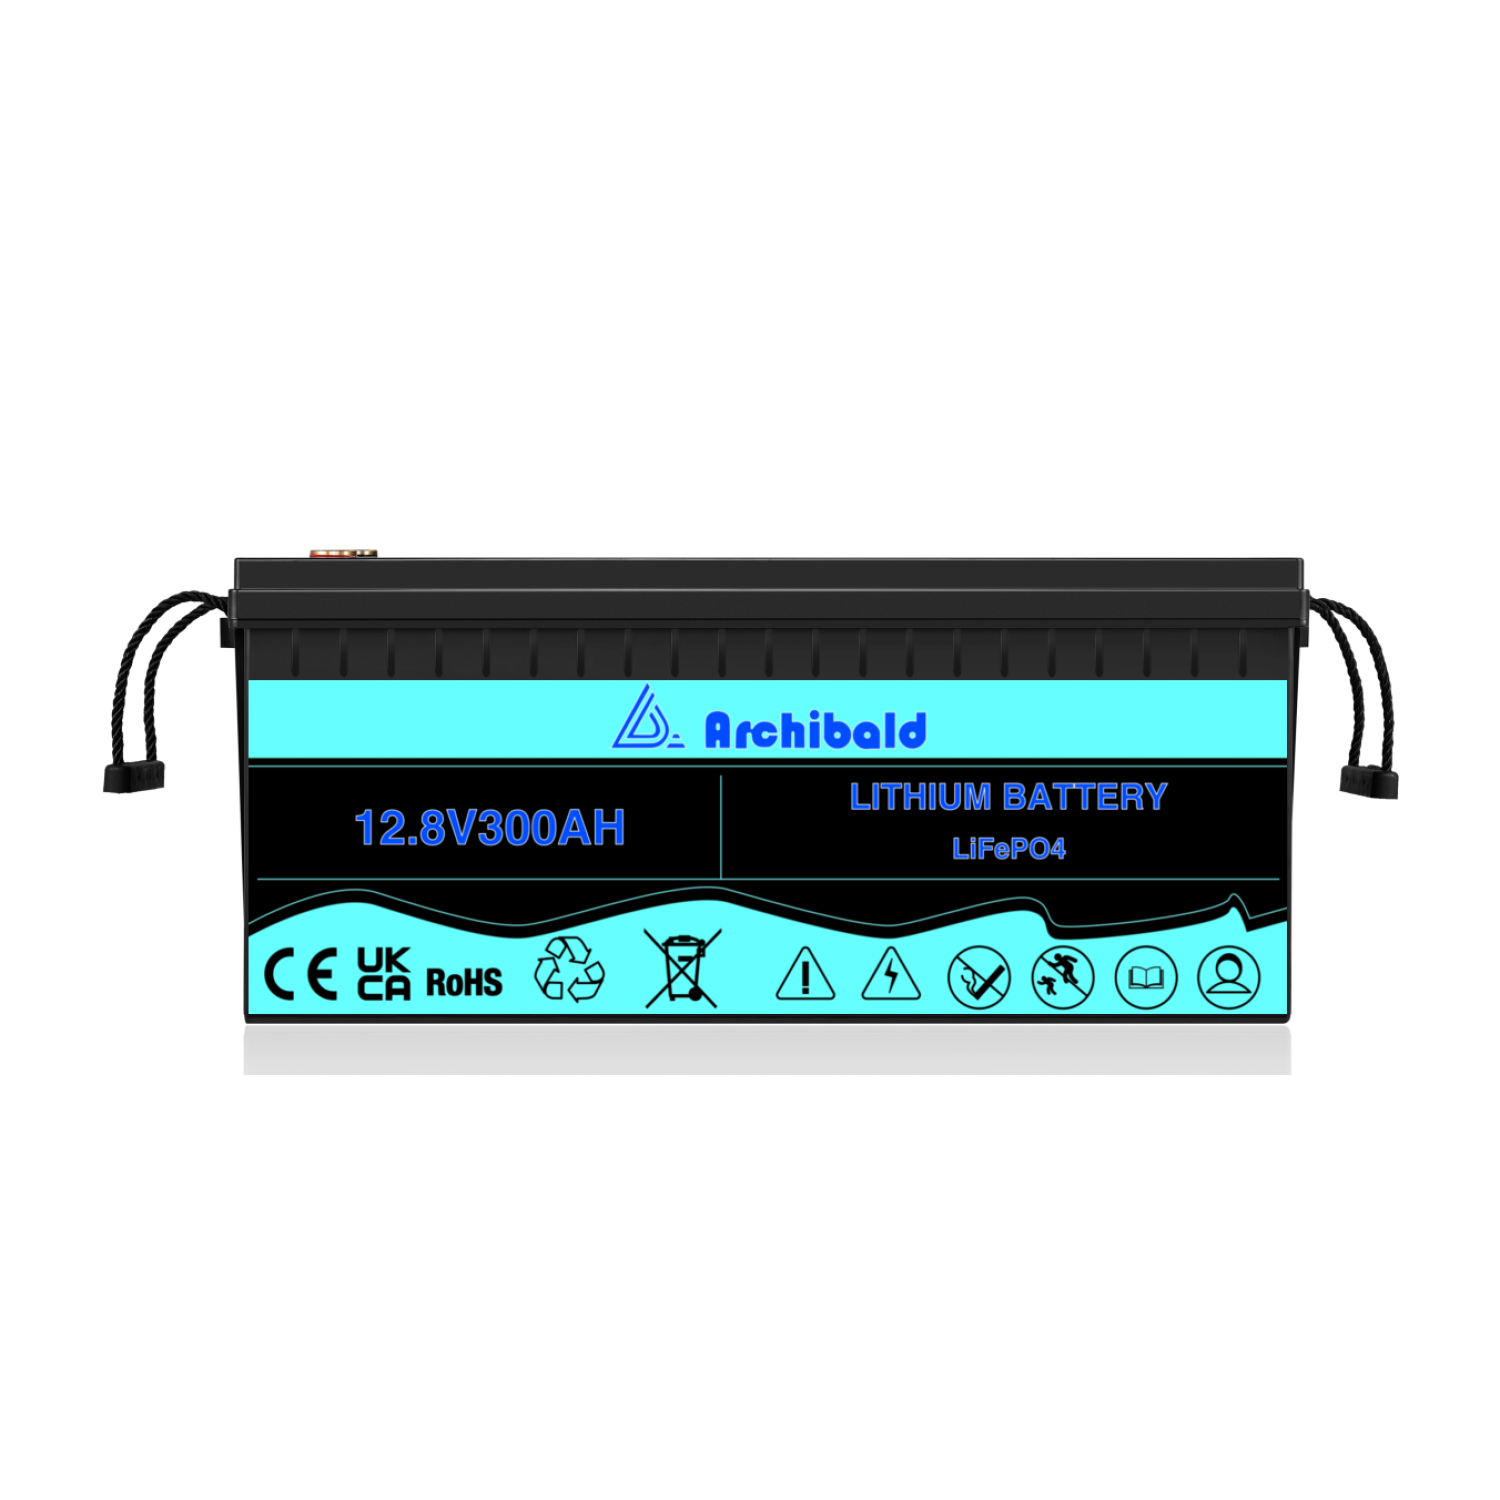 12V 300AH Lifepo4 Battery Pack more than 3500 Cycles High Capacity Long Life Lithium ion